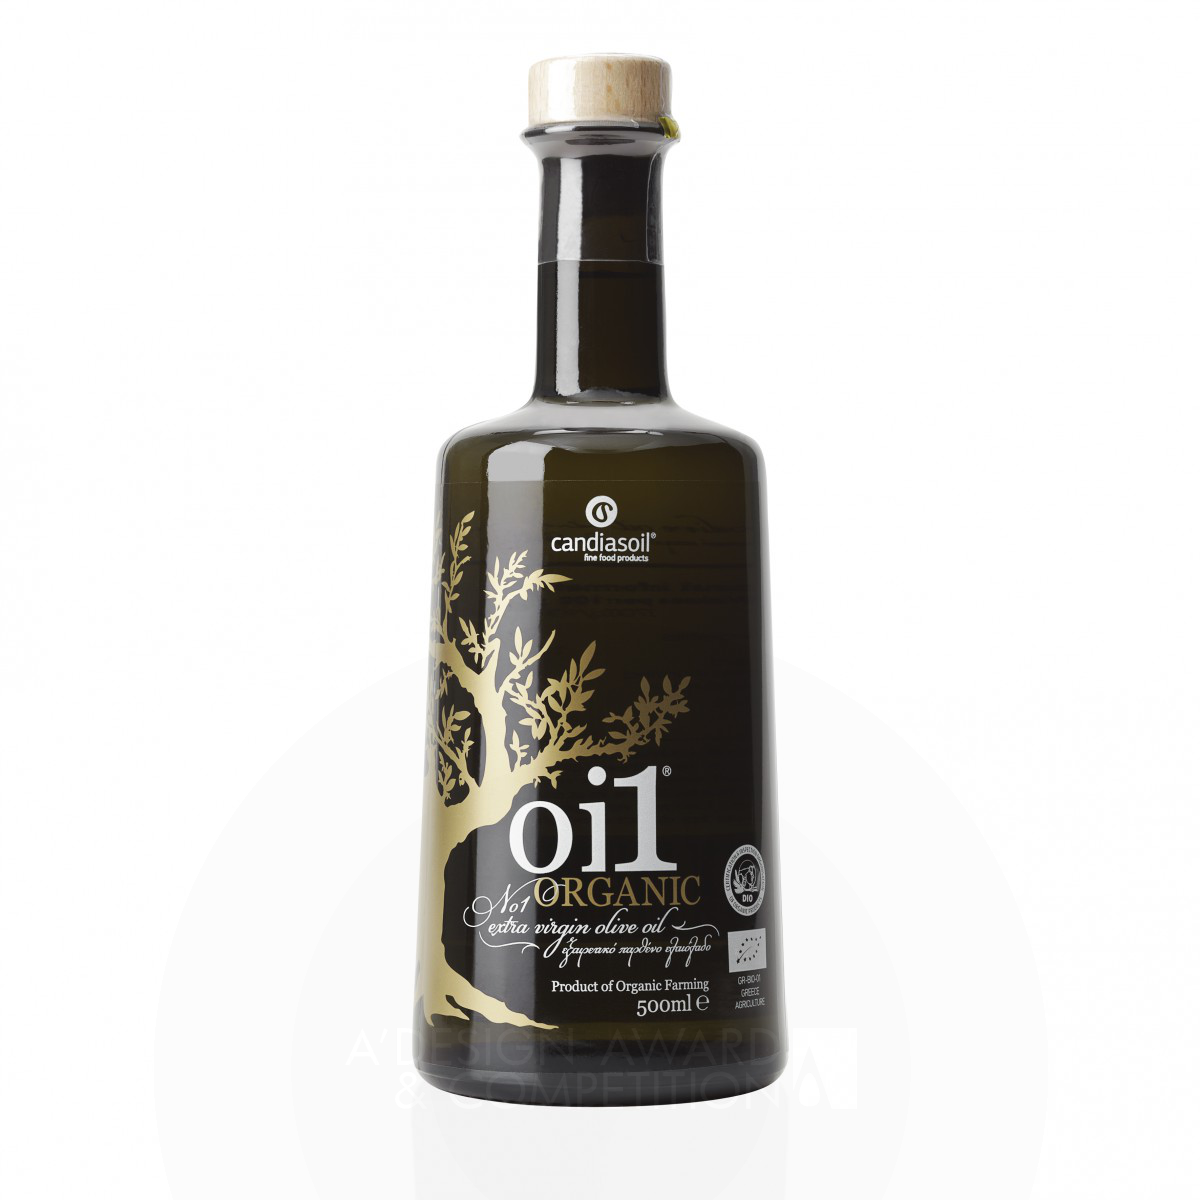 oi1 for Candiasoil  Olive oil packaging design by Ioanna Drakaki